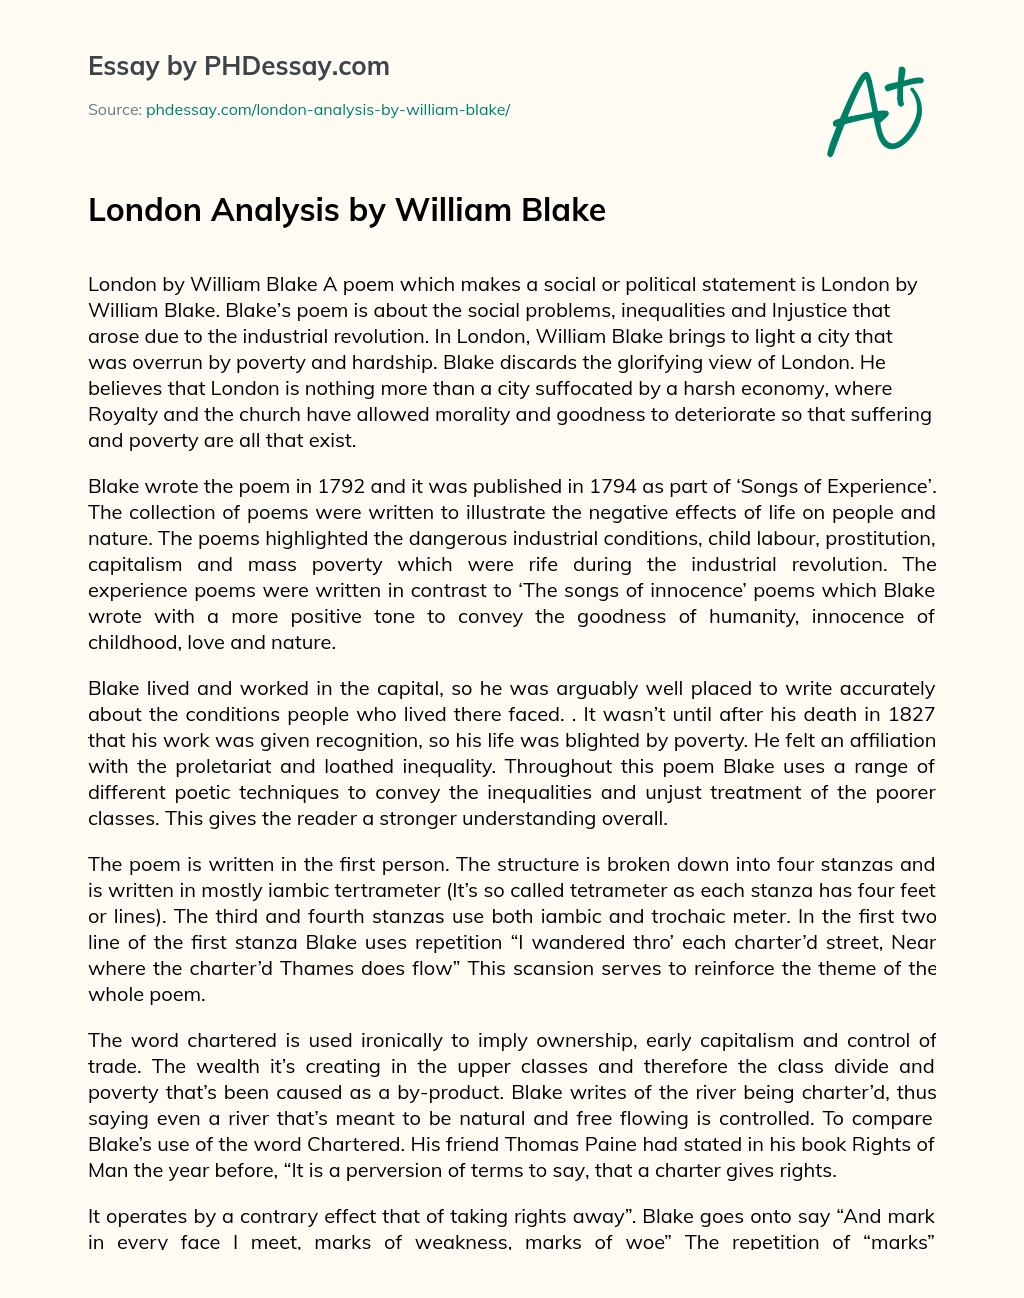 London Analysis by William Blake essay